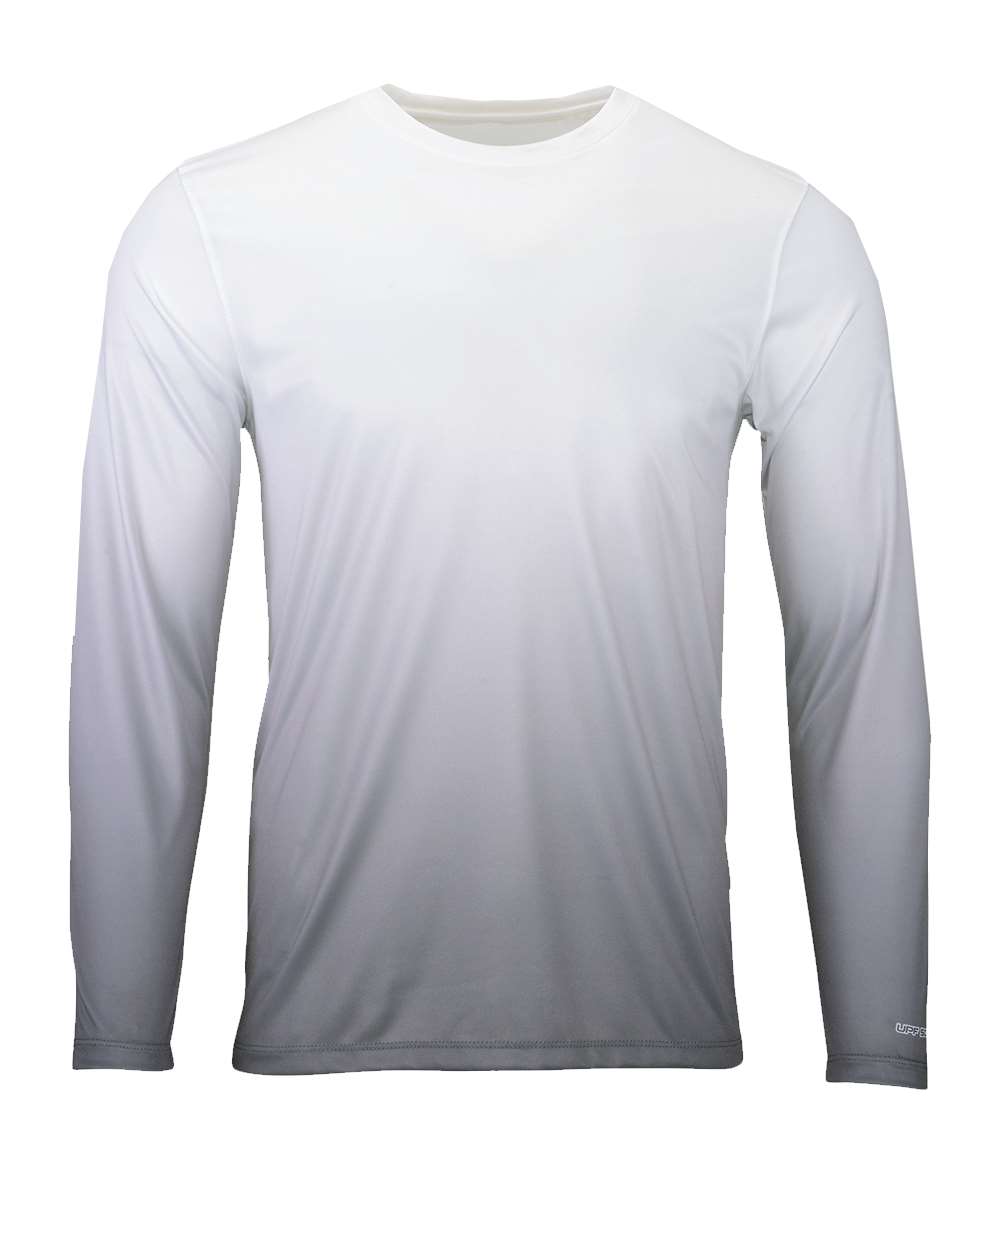 Paragon 233 - Maui Performance Long Sleeve T-Shirt